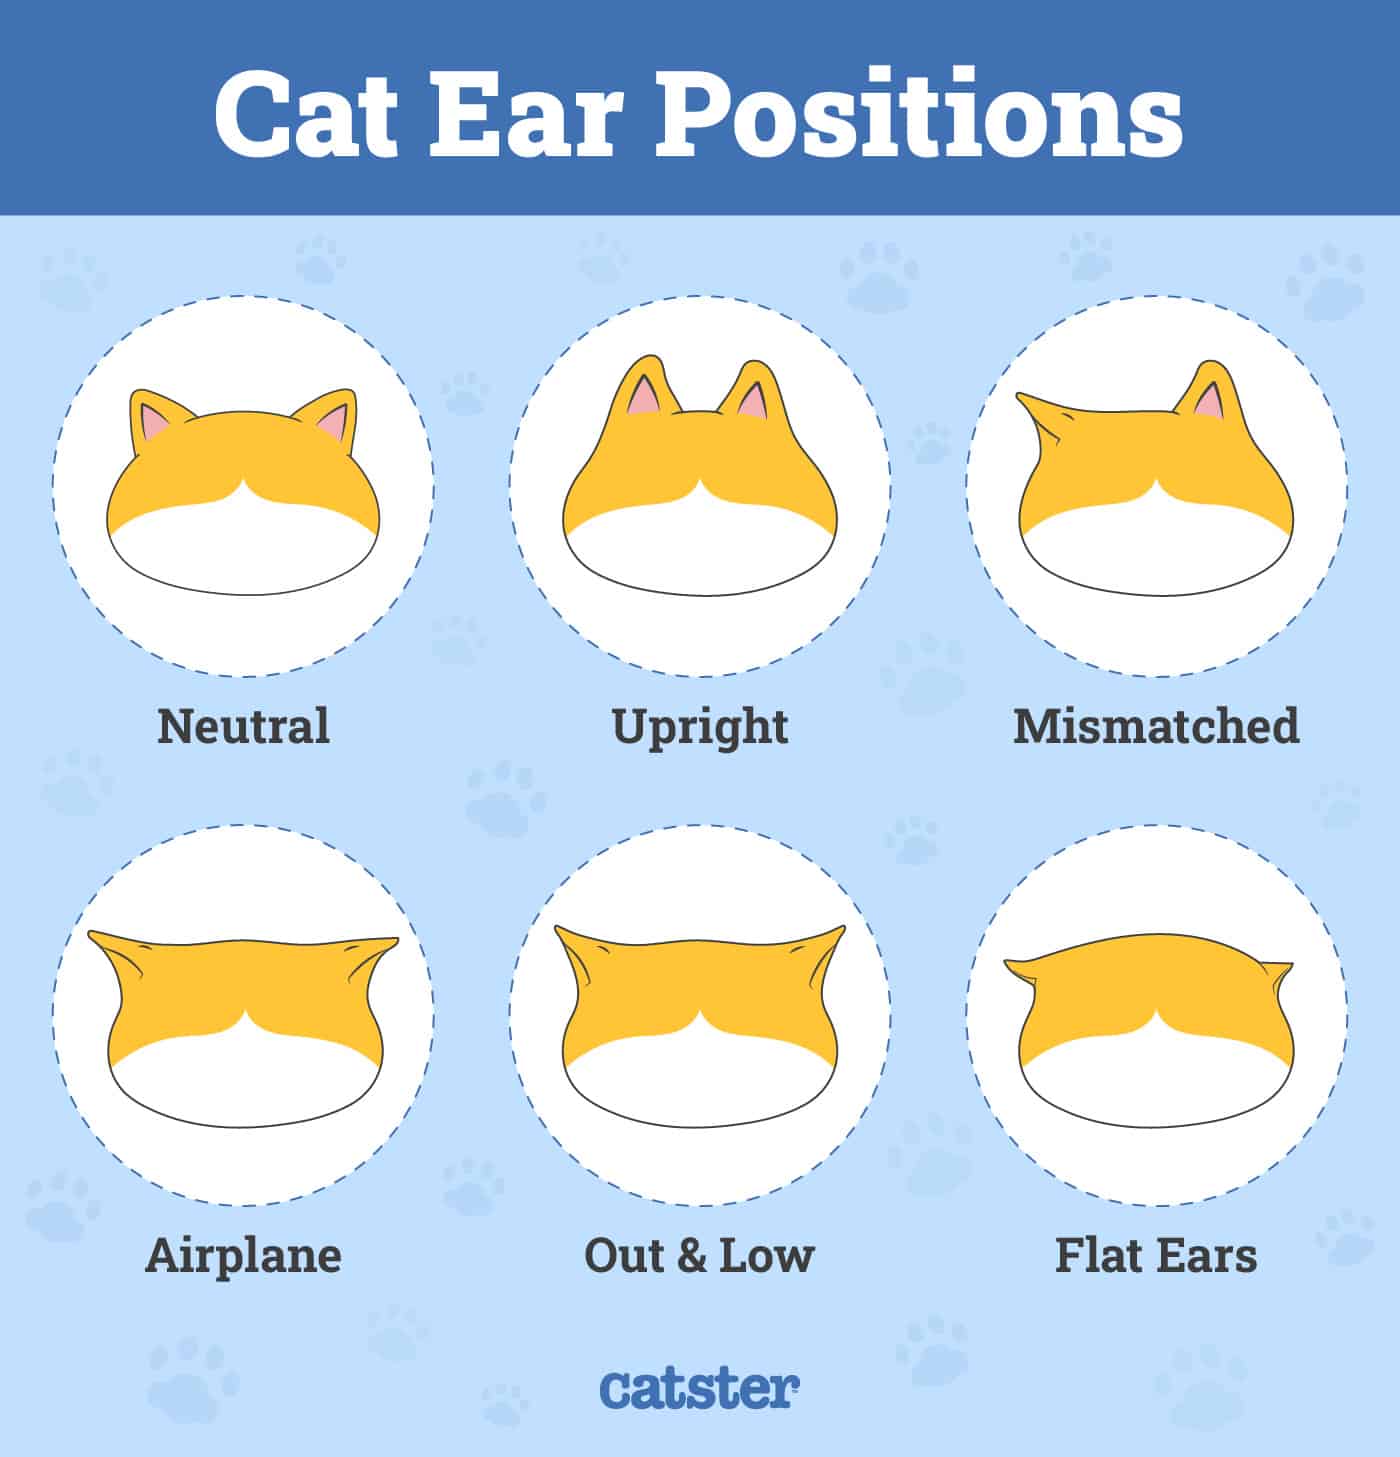 Cat ear positions